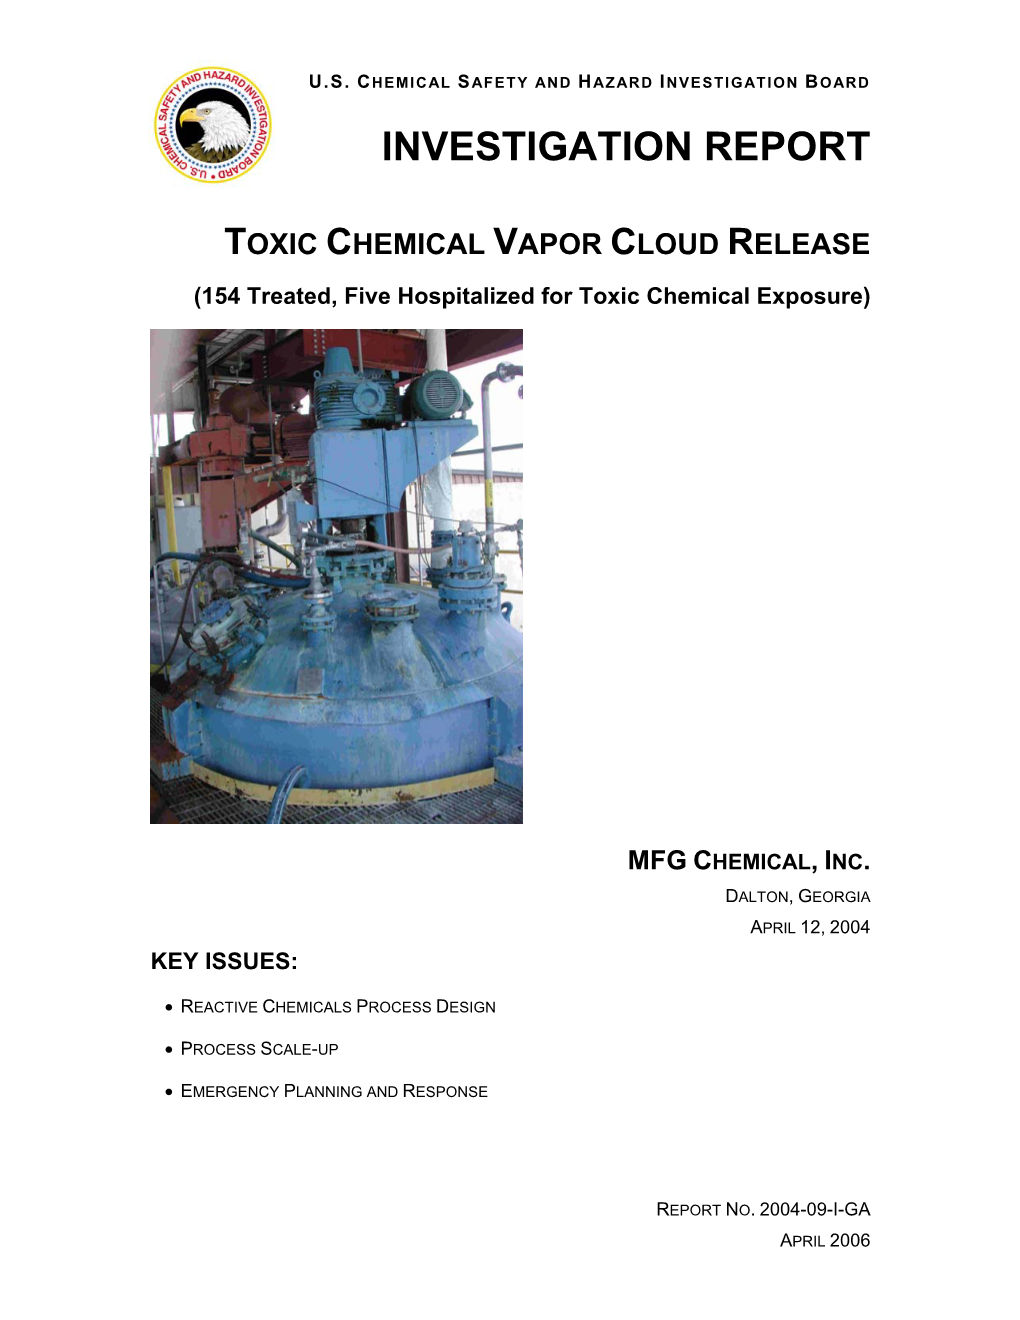 Toxic Chemical Vapor Cloud Release